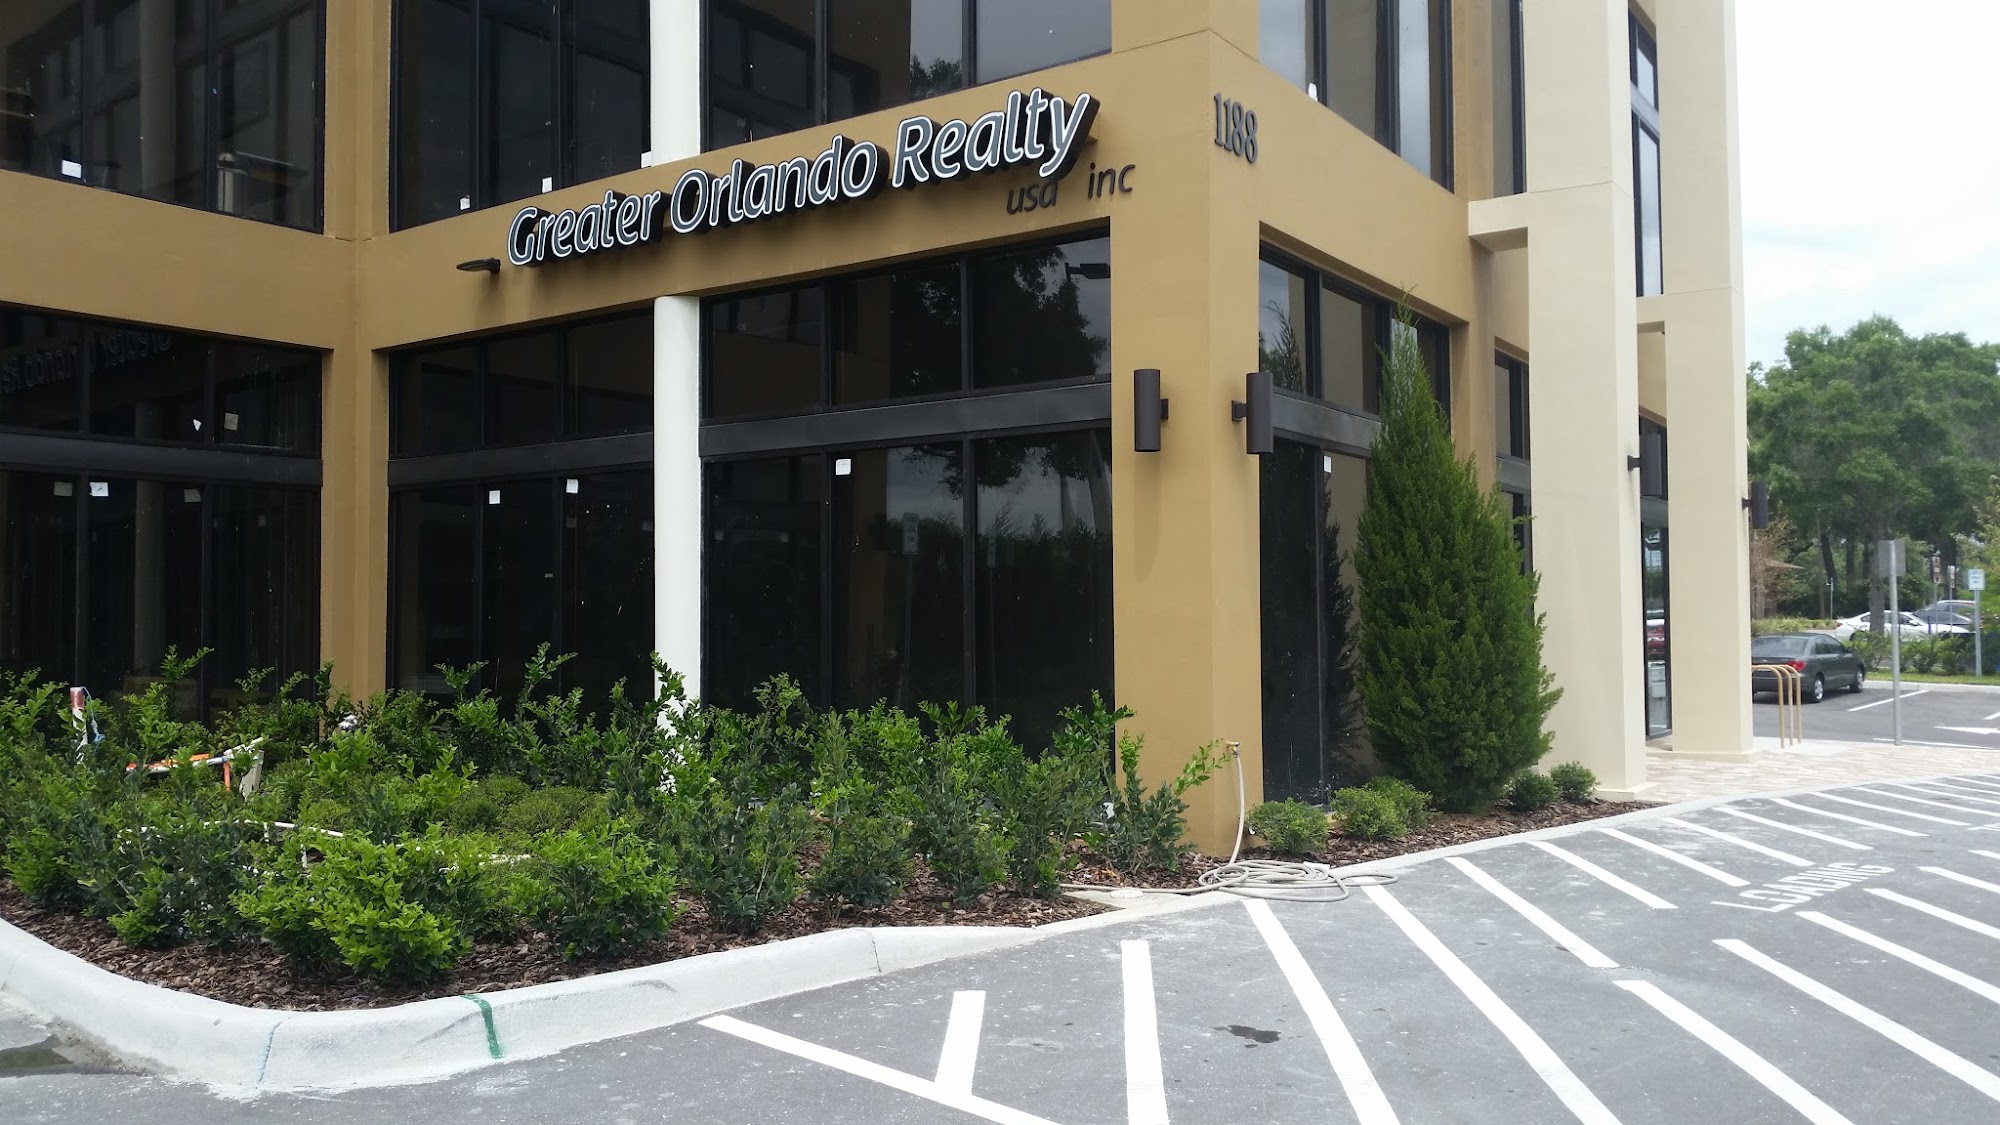 Greater Orlando Realty USA, Inc.